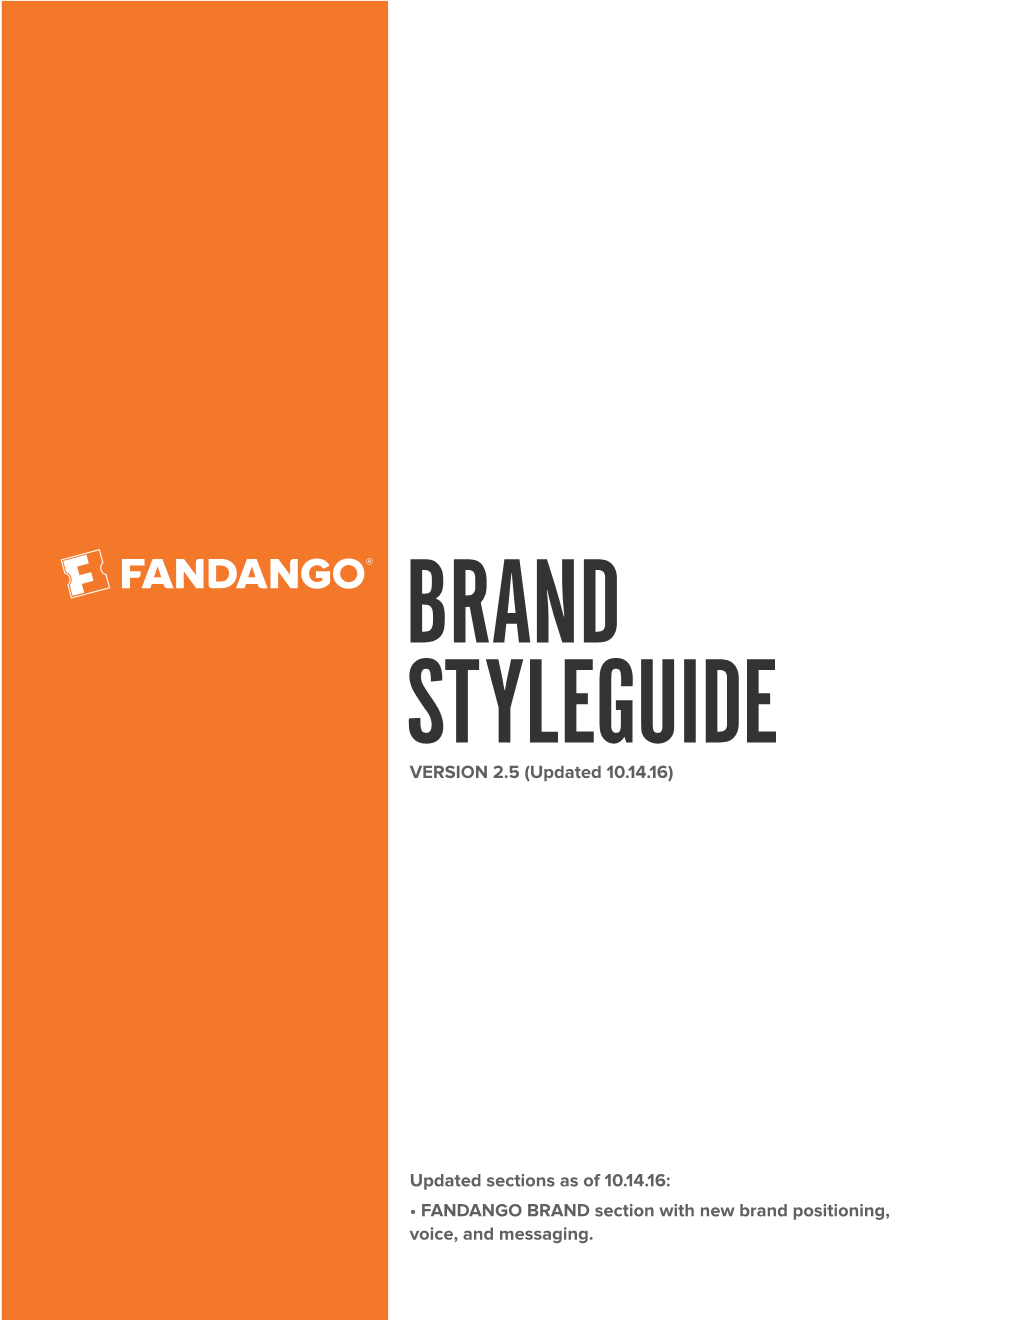 Brand Guidelines © 2016 Fandango Media, LLC